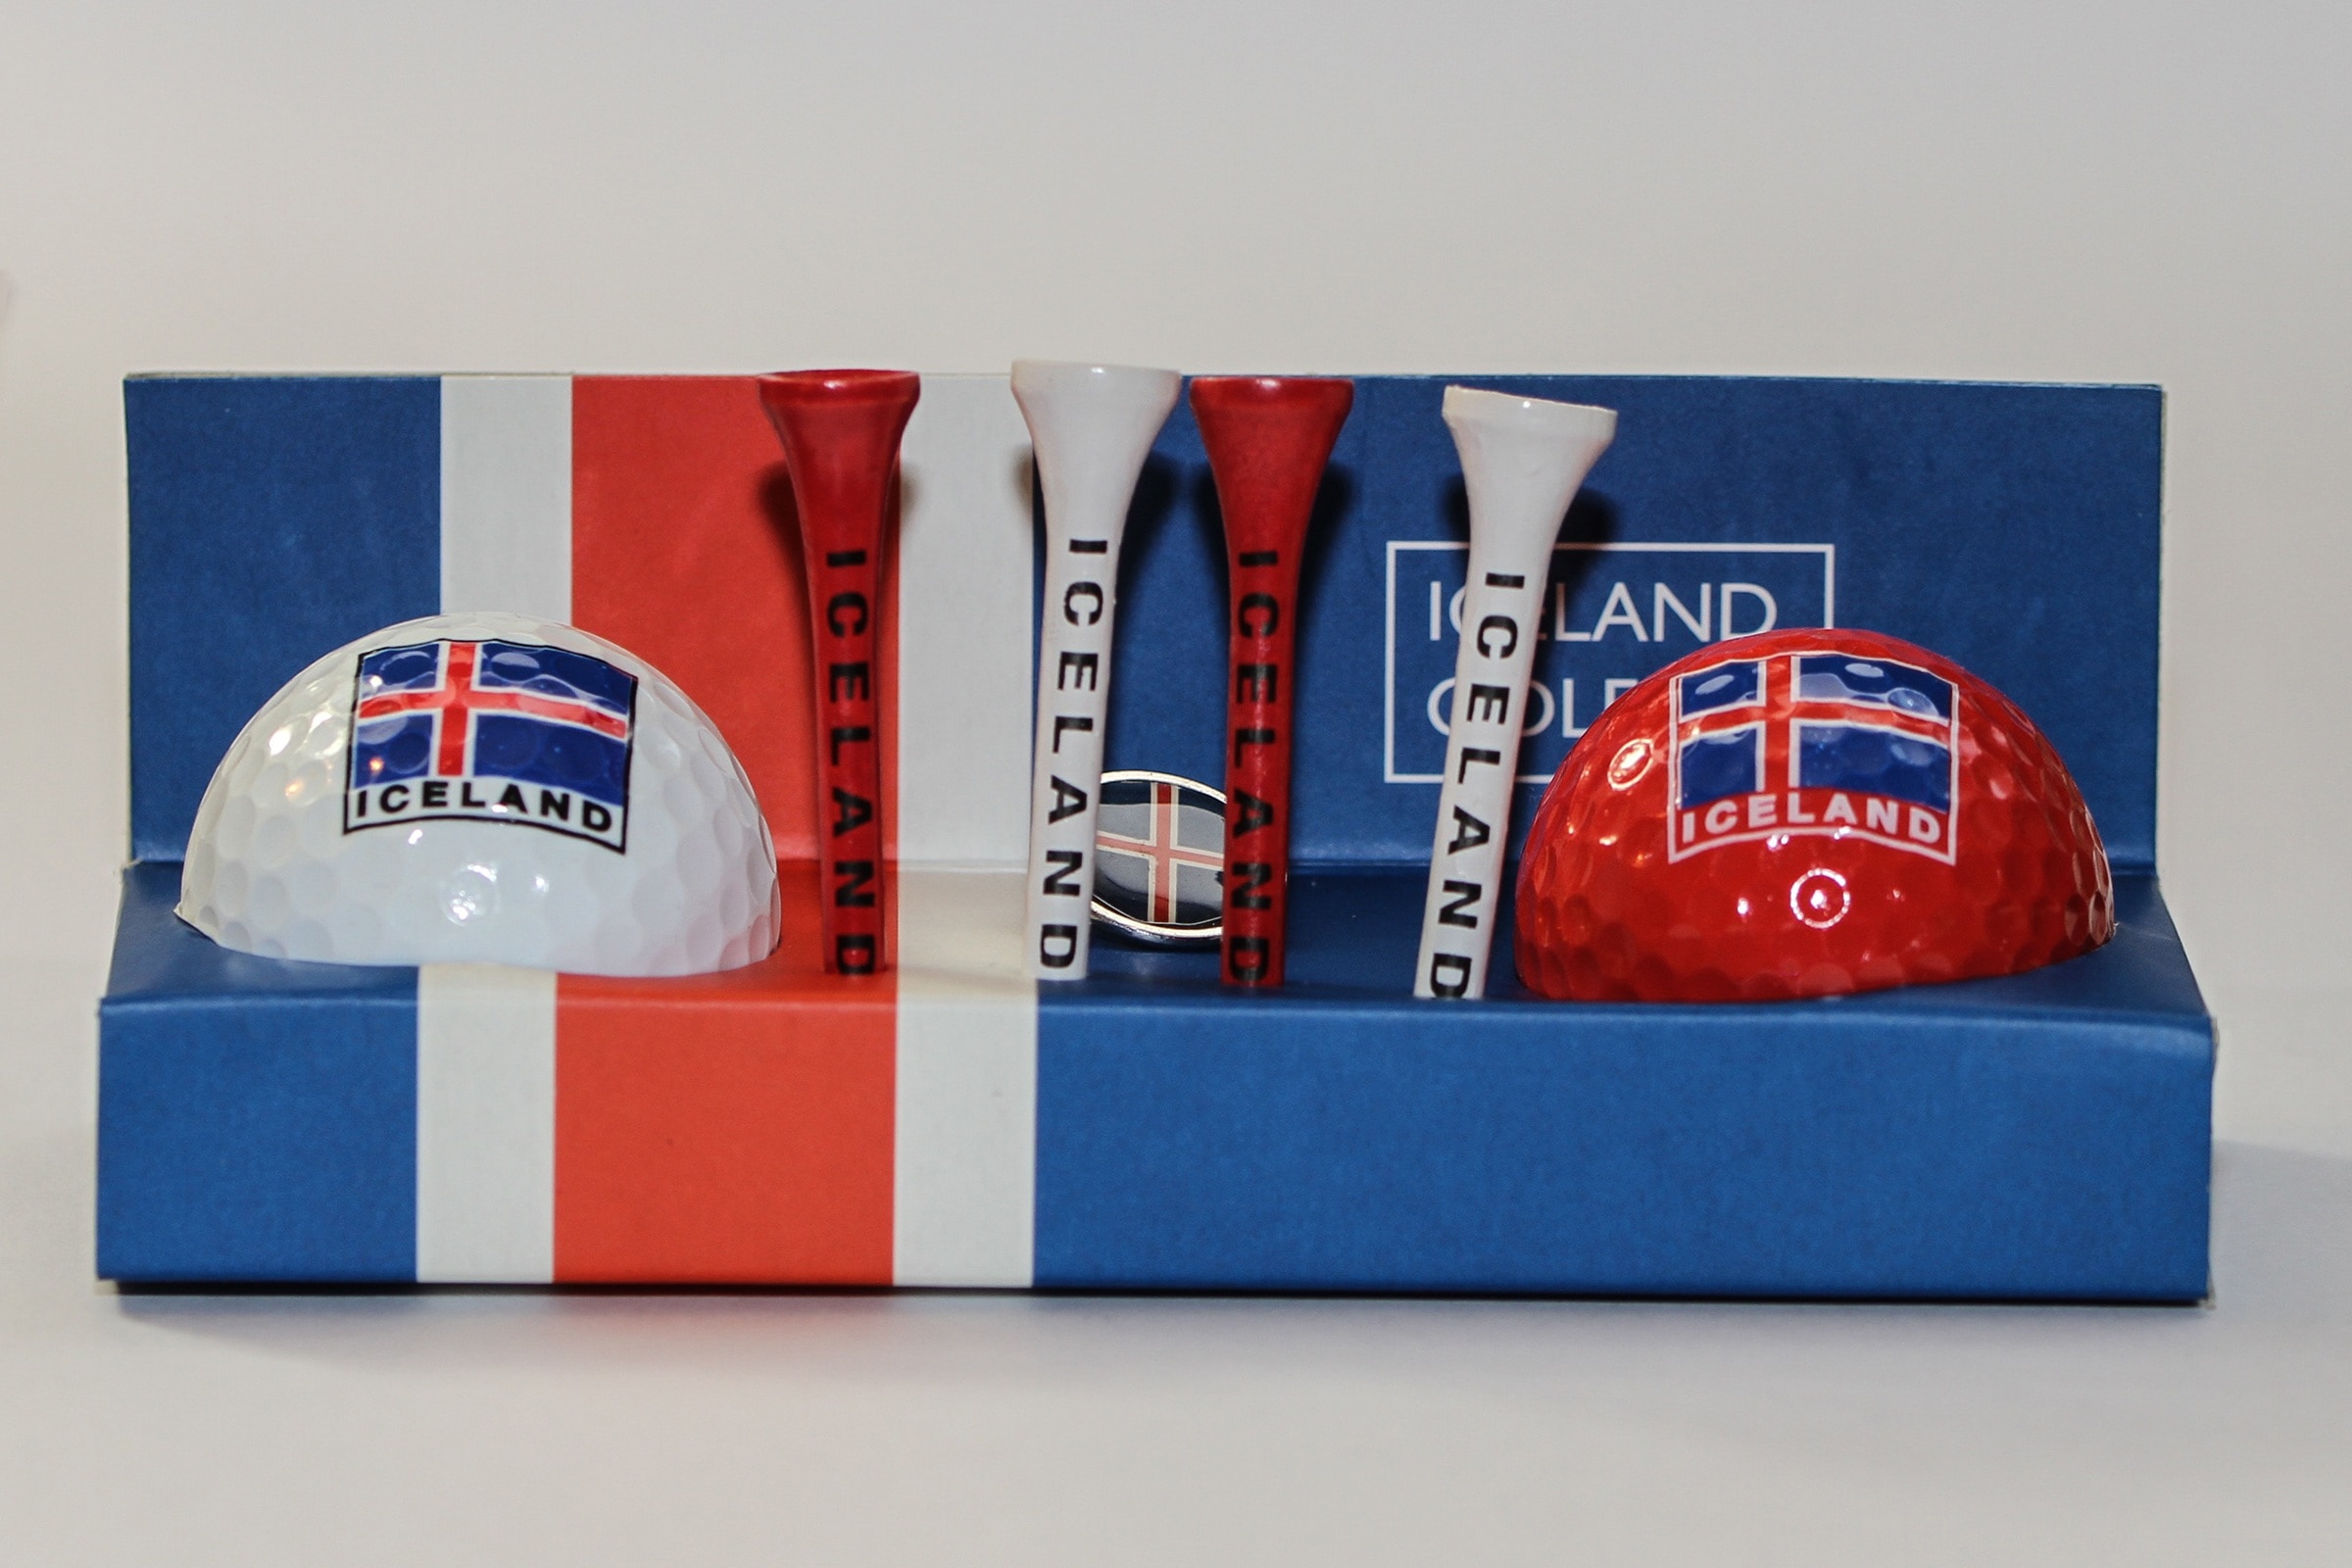 Golf, Golf Balls, Iceland, Golf-Tee, red, front view